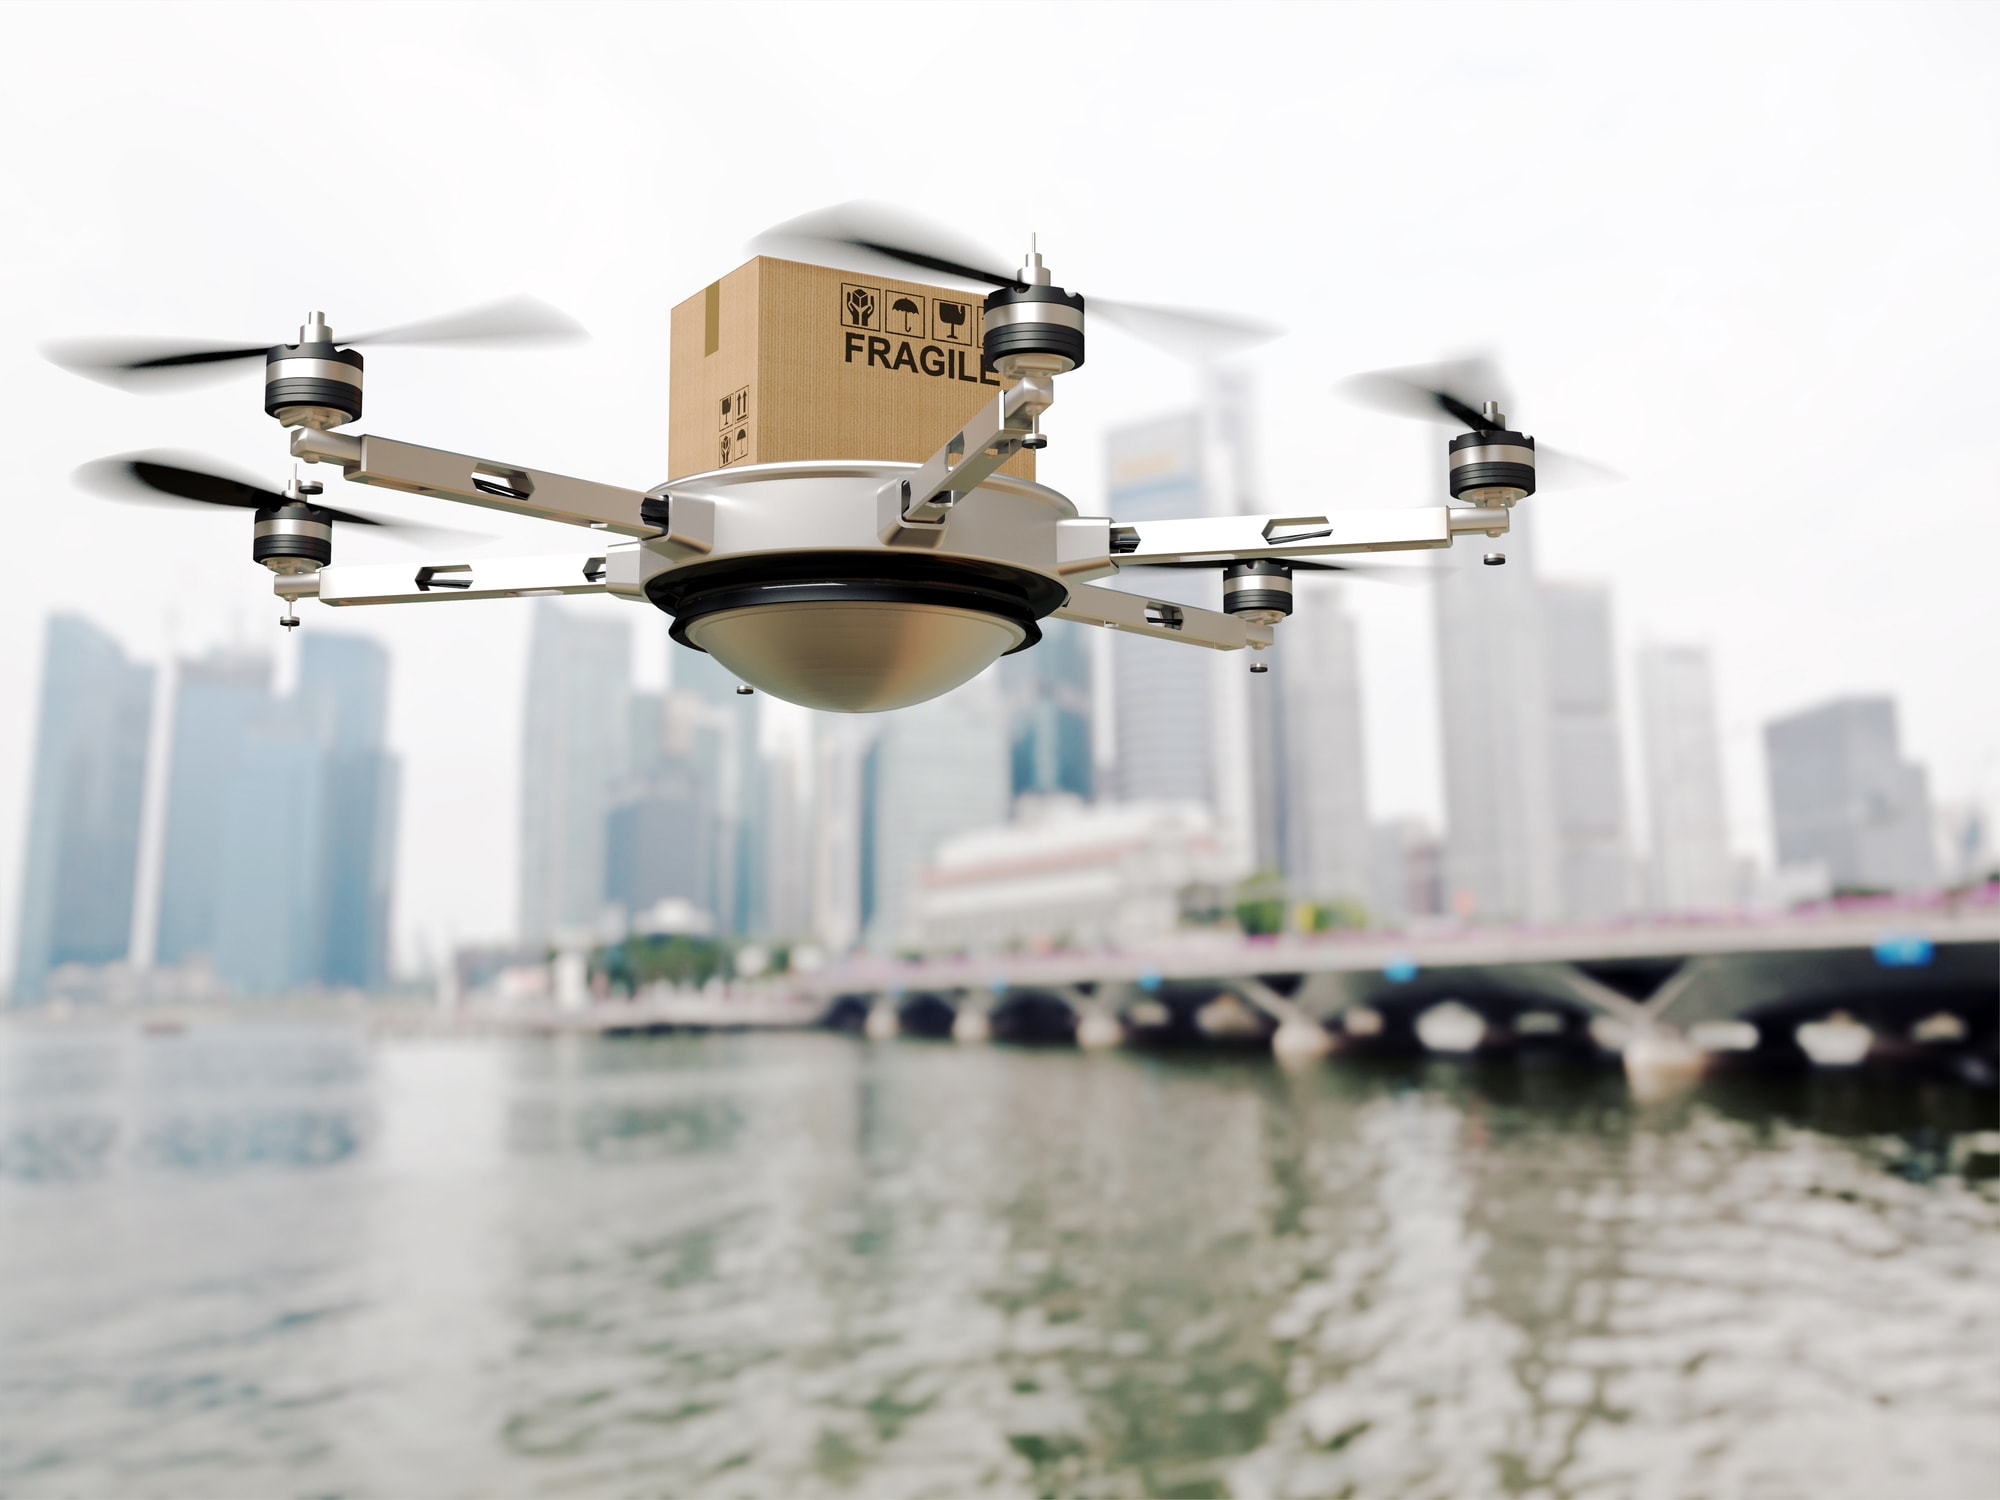 Drone Delivery Healthcare Retail